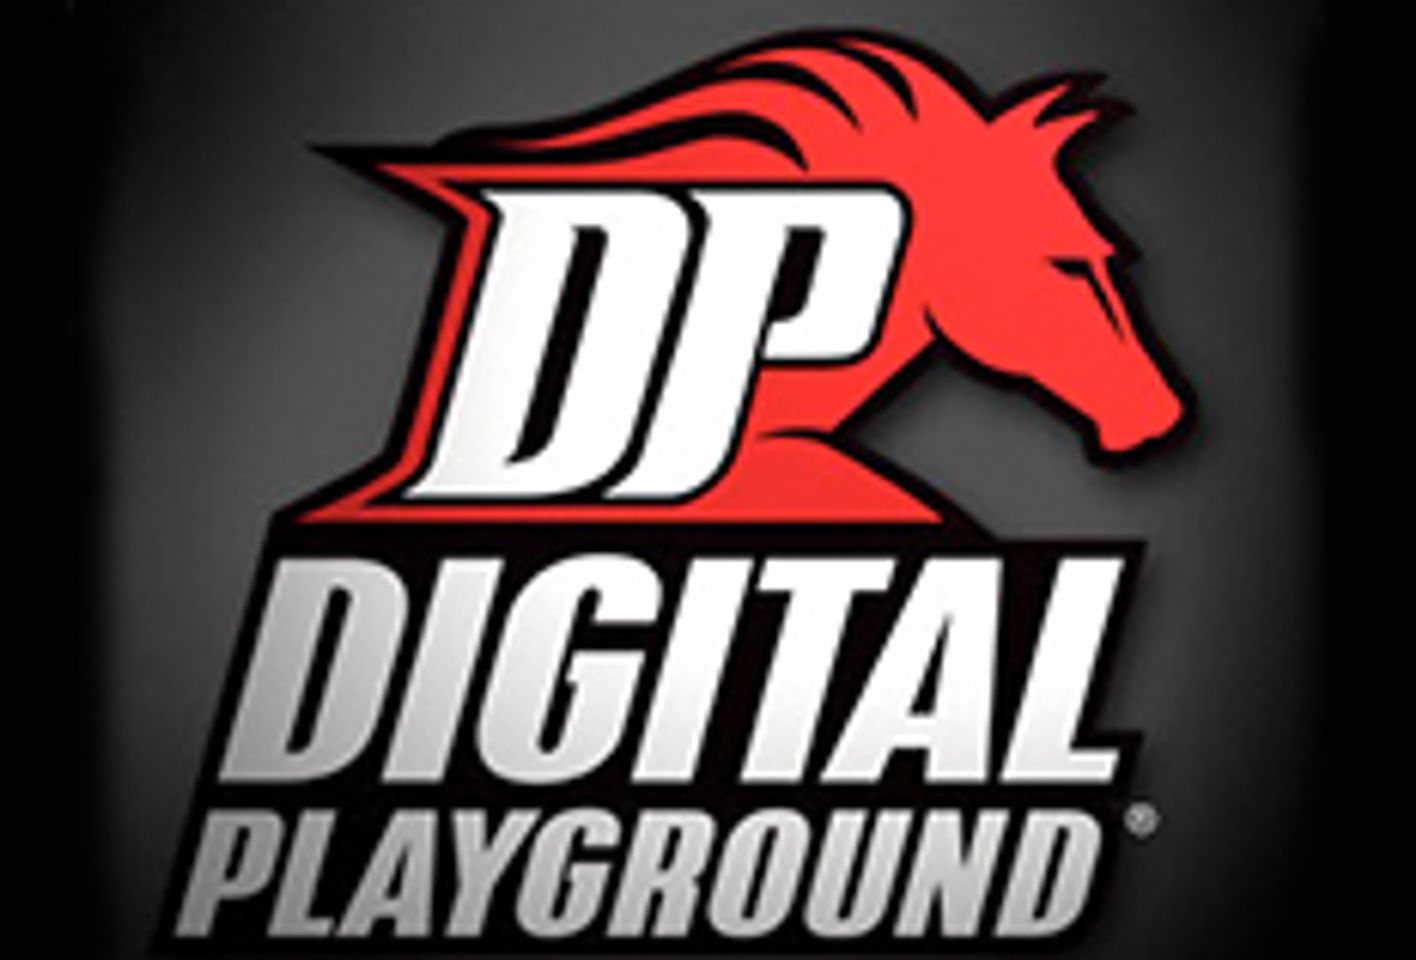 Digital Playground's 'Pirates II' Screens at Universities Nationwide